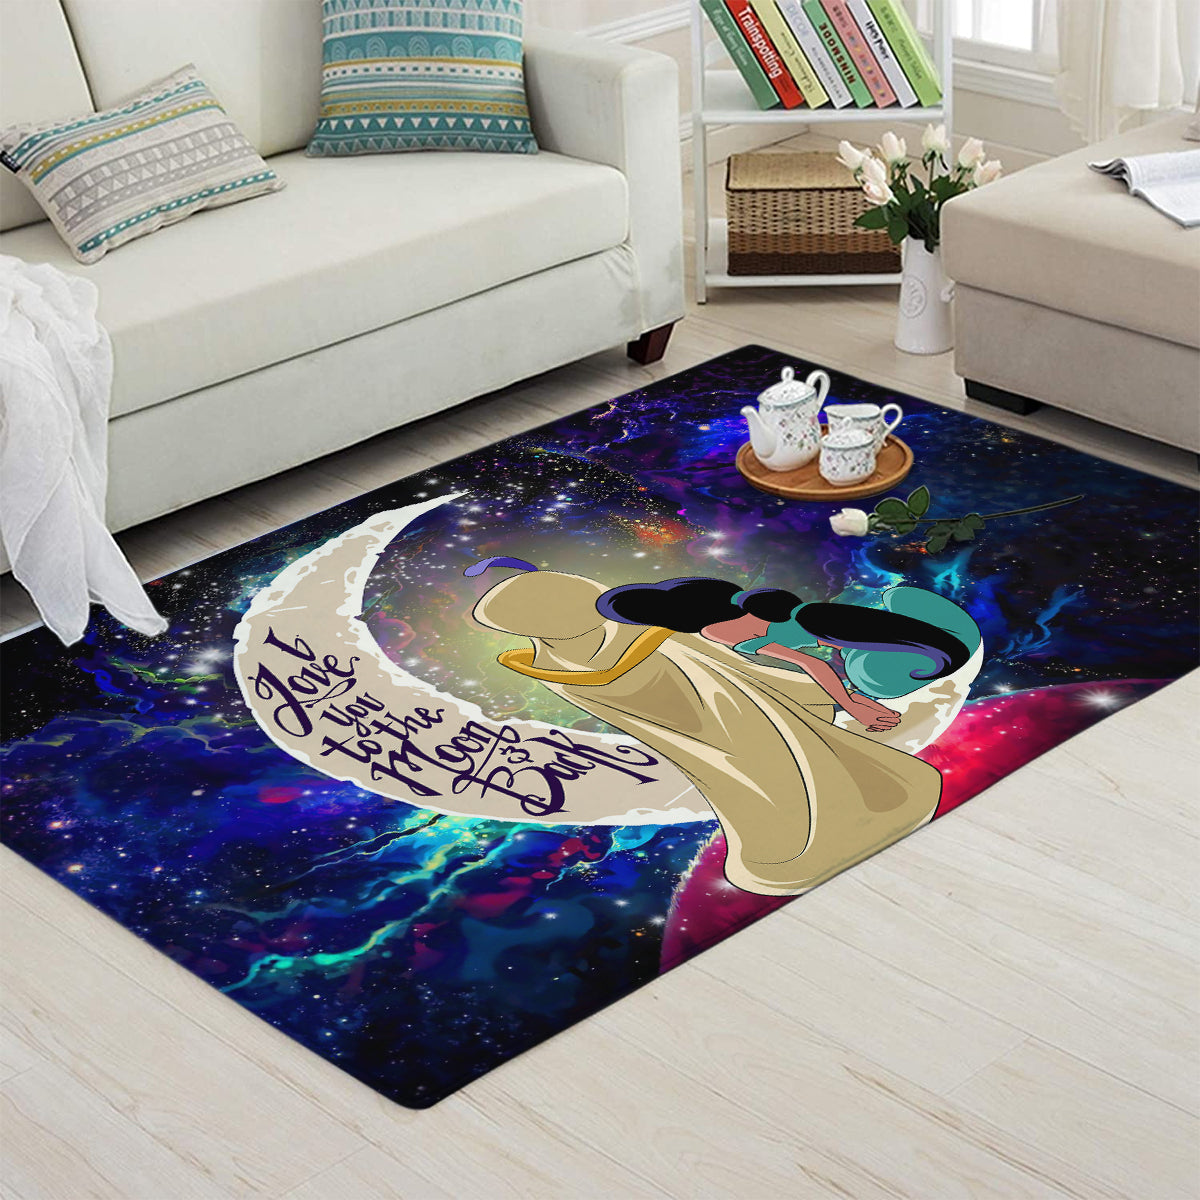 Aladin Couple Love You To The Moon Galaxy Carpet Rug Home Room Decor